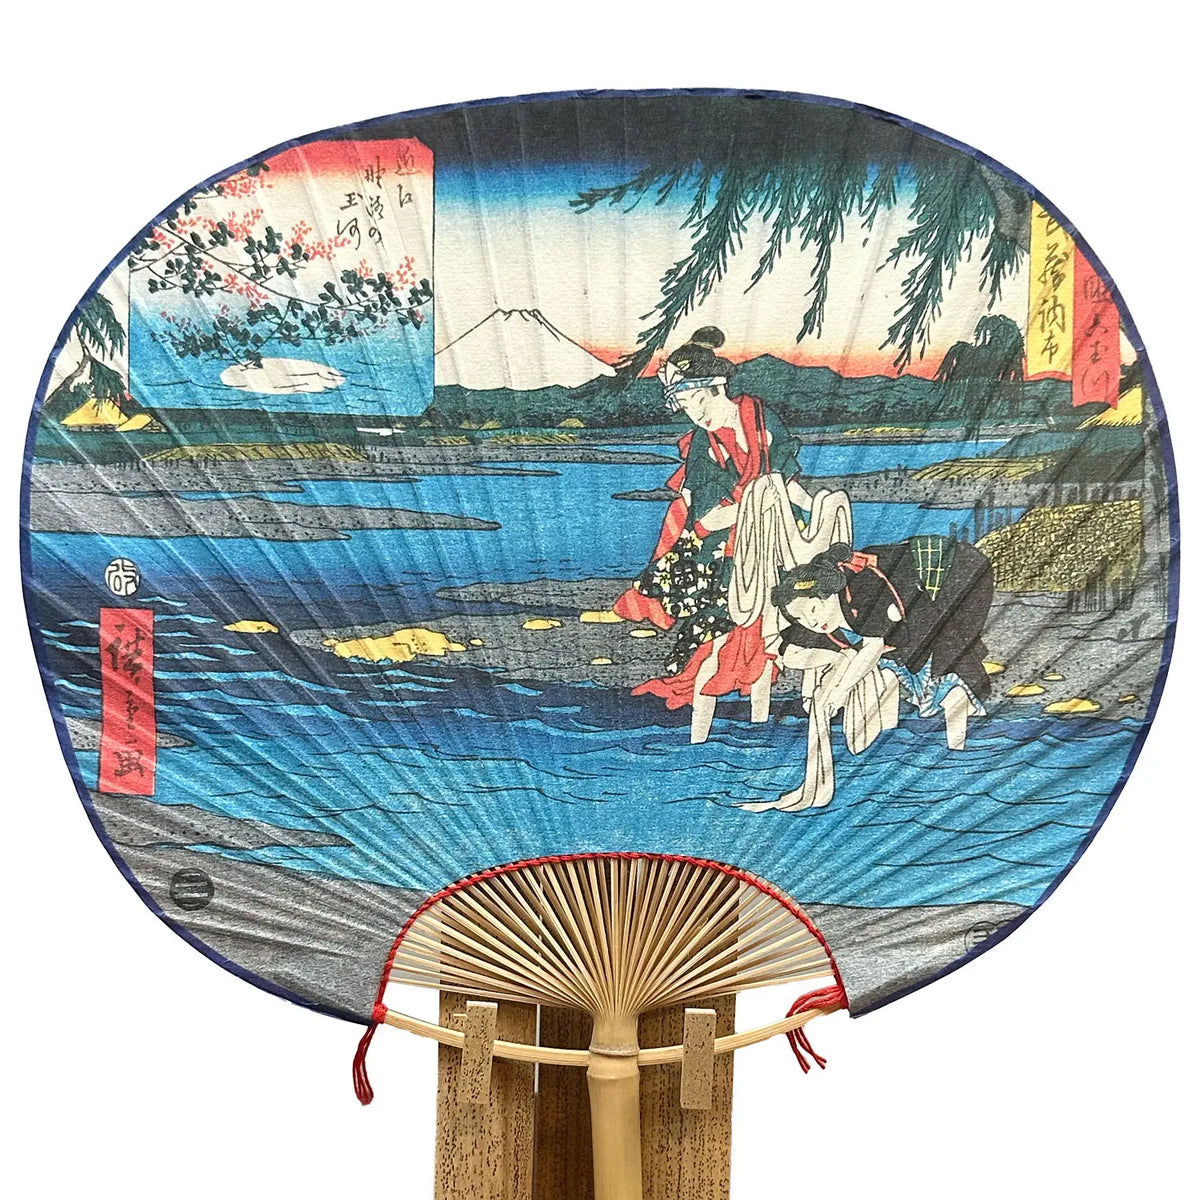 Ukiyoe Hiroshige "Musashi Chofu / Tama River", Edo Ukiyoe, Rokutama River, Japan